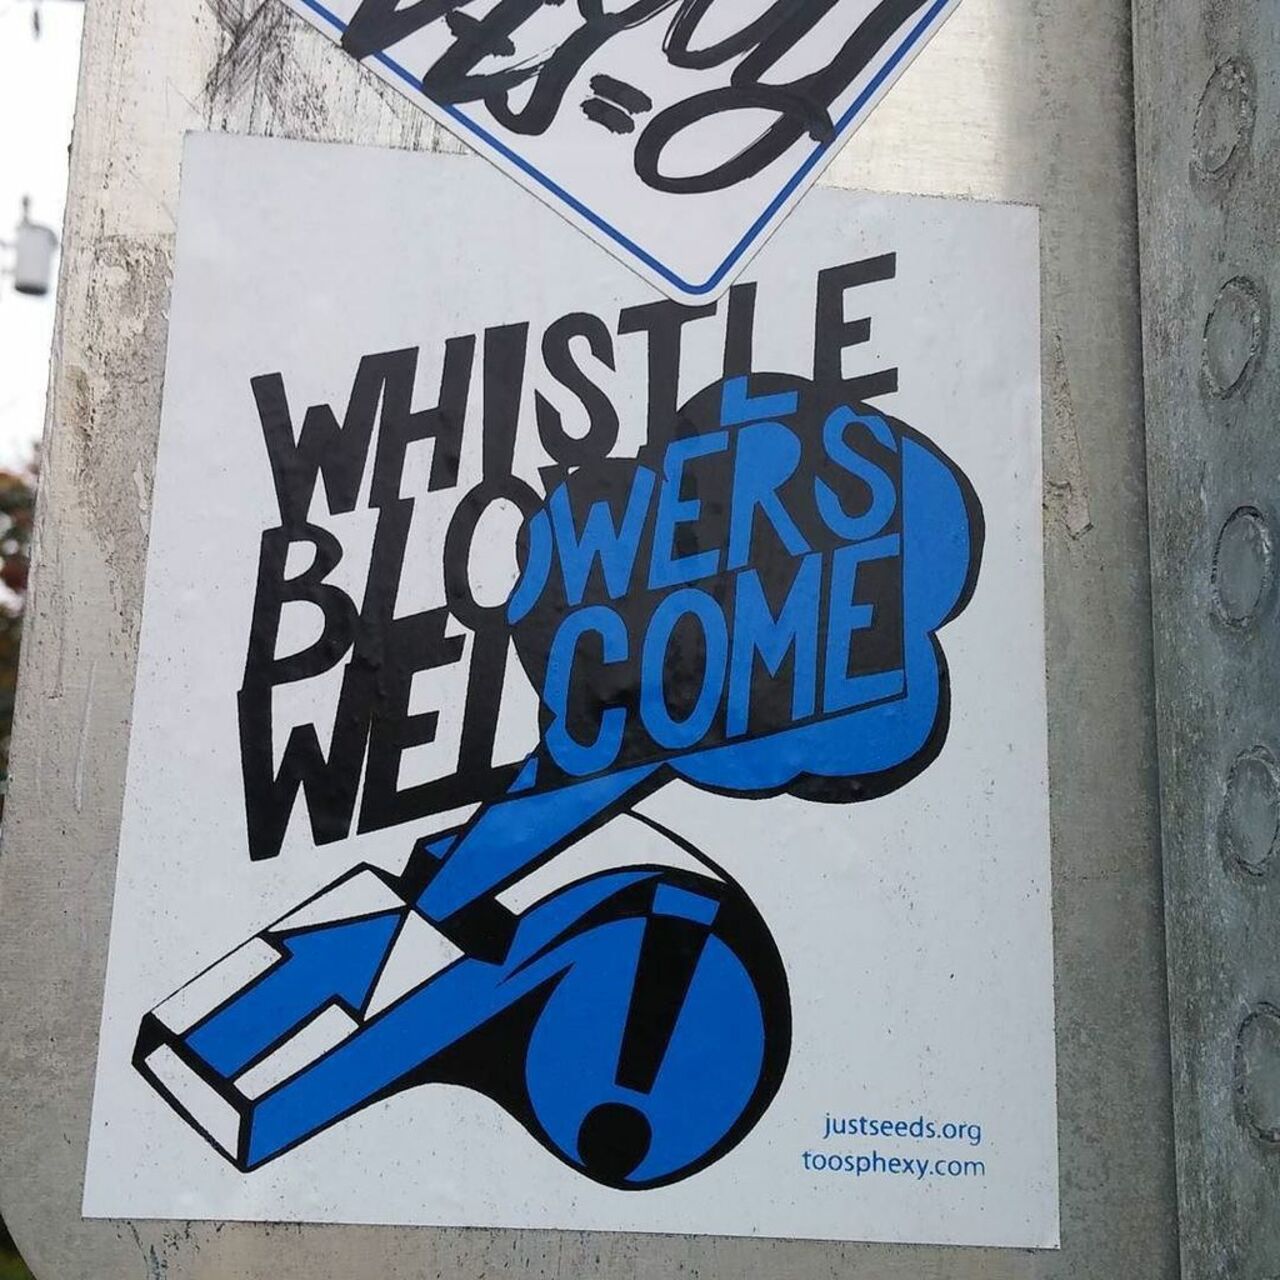 #seattle #streetart #graffiti #art #nofilter #urban #art #urbanart #artsy #instagraffiti #whistleblower #anonymous https://t.co/1FIx6VIeRy